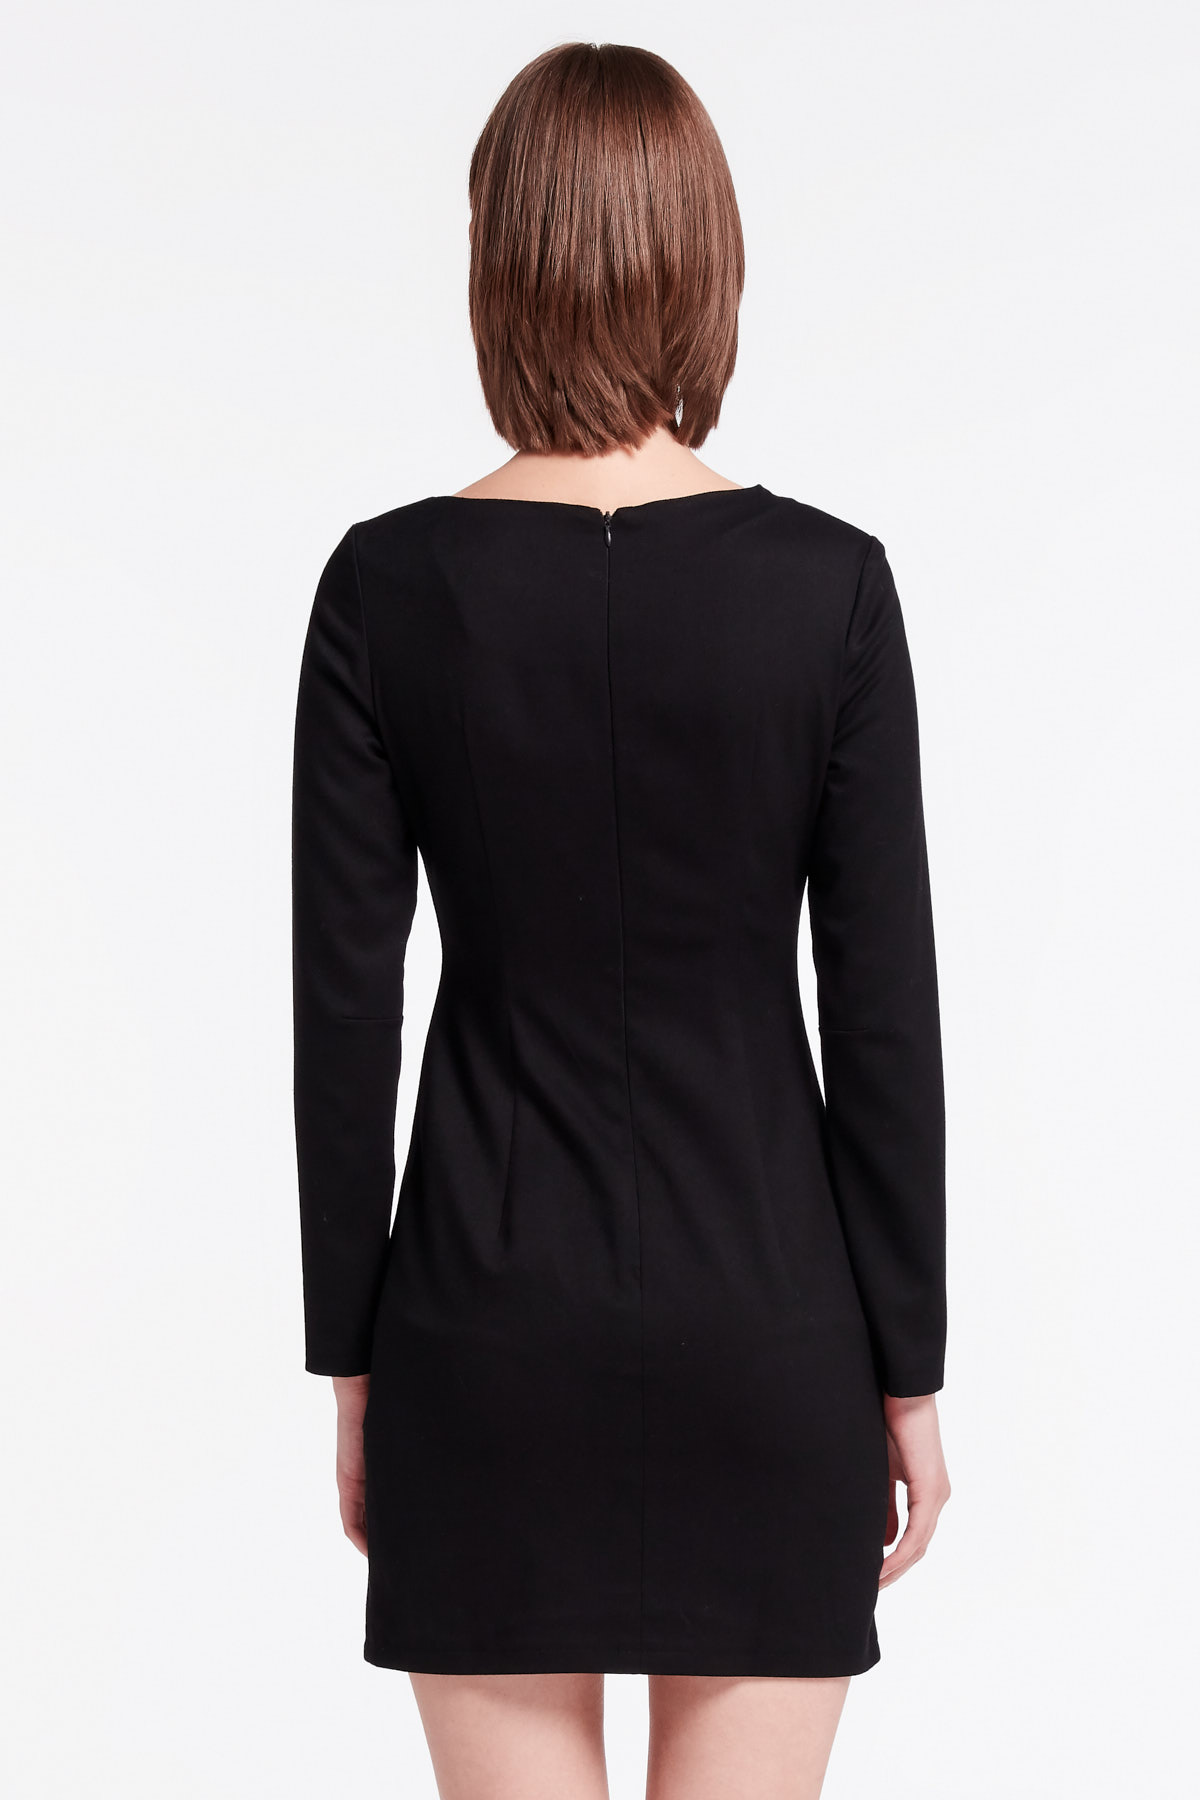 Black dress with above-knee asymmetric cut, photo 5